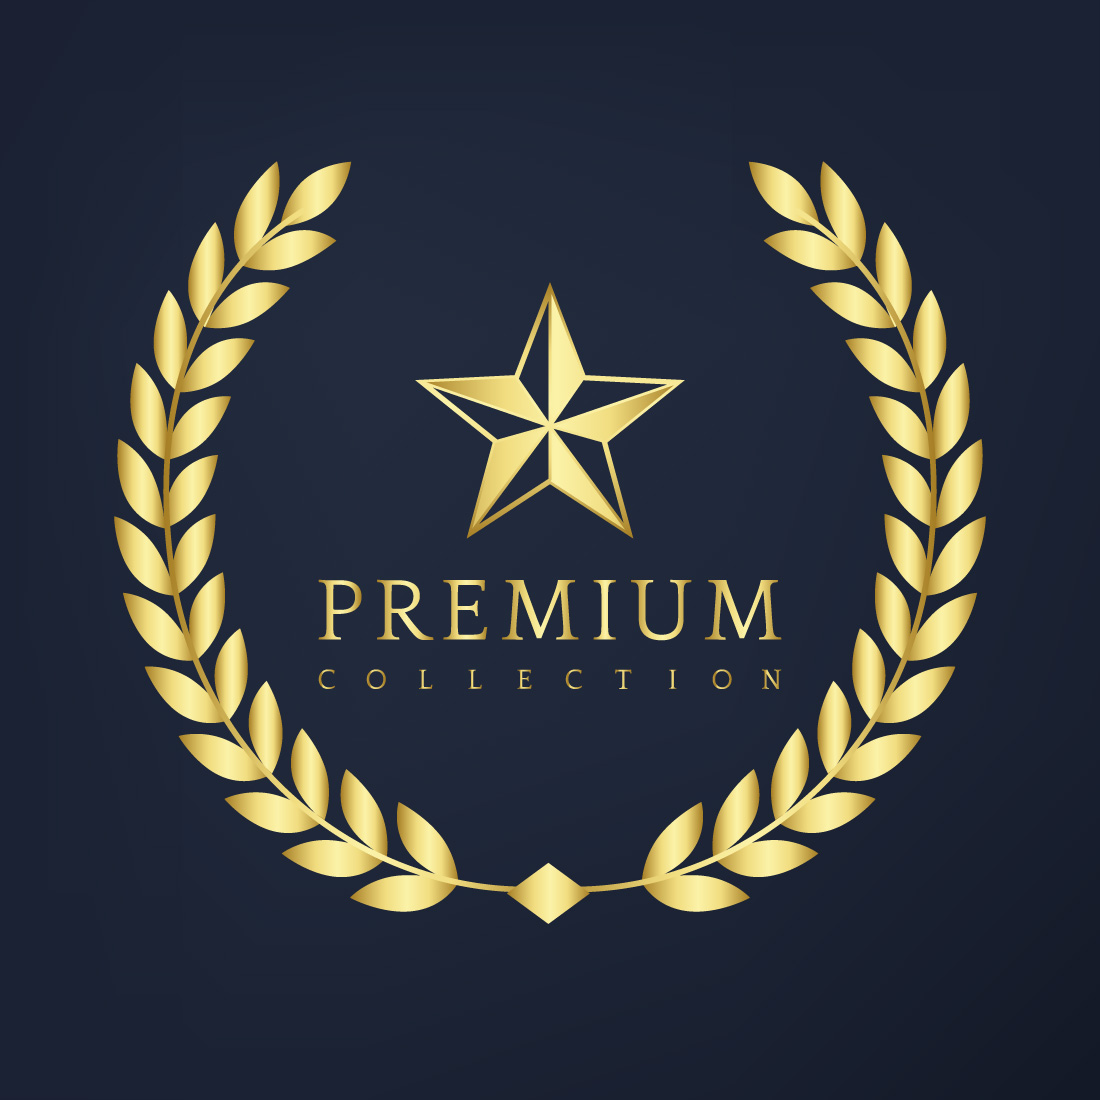 Premium collection badge design cover image.